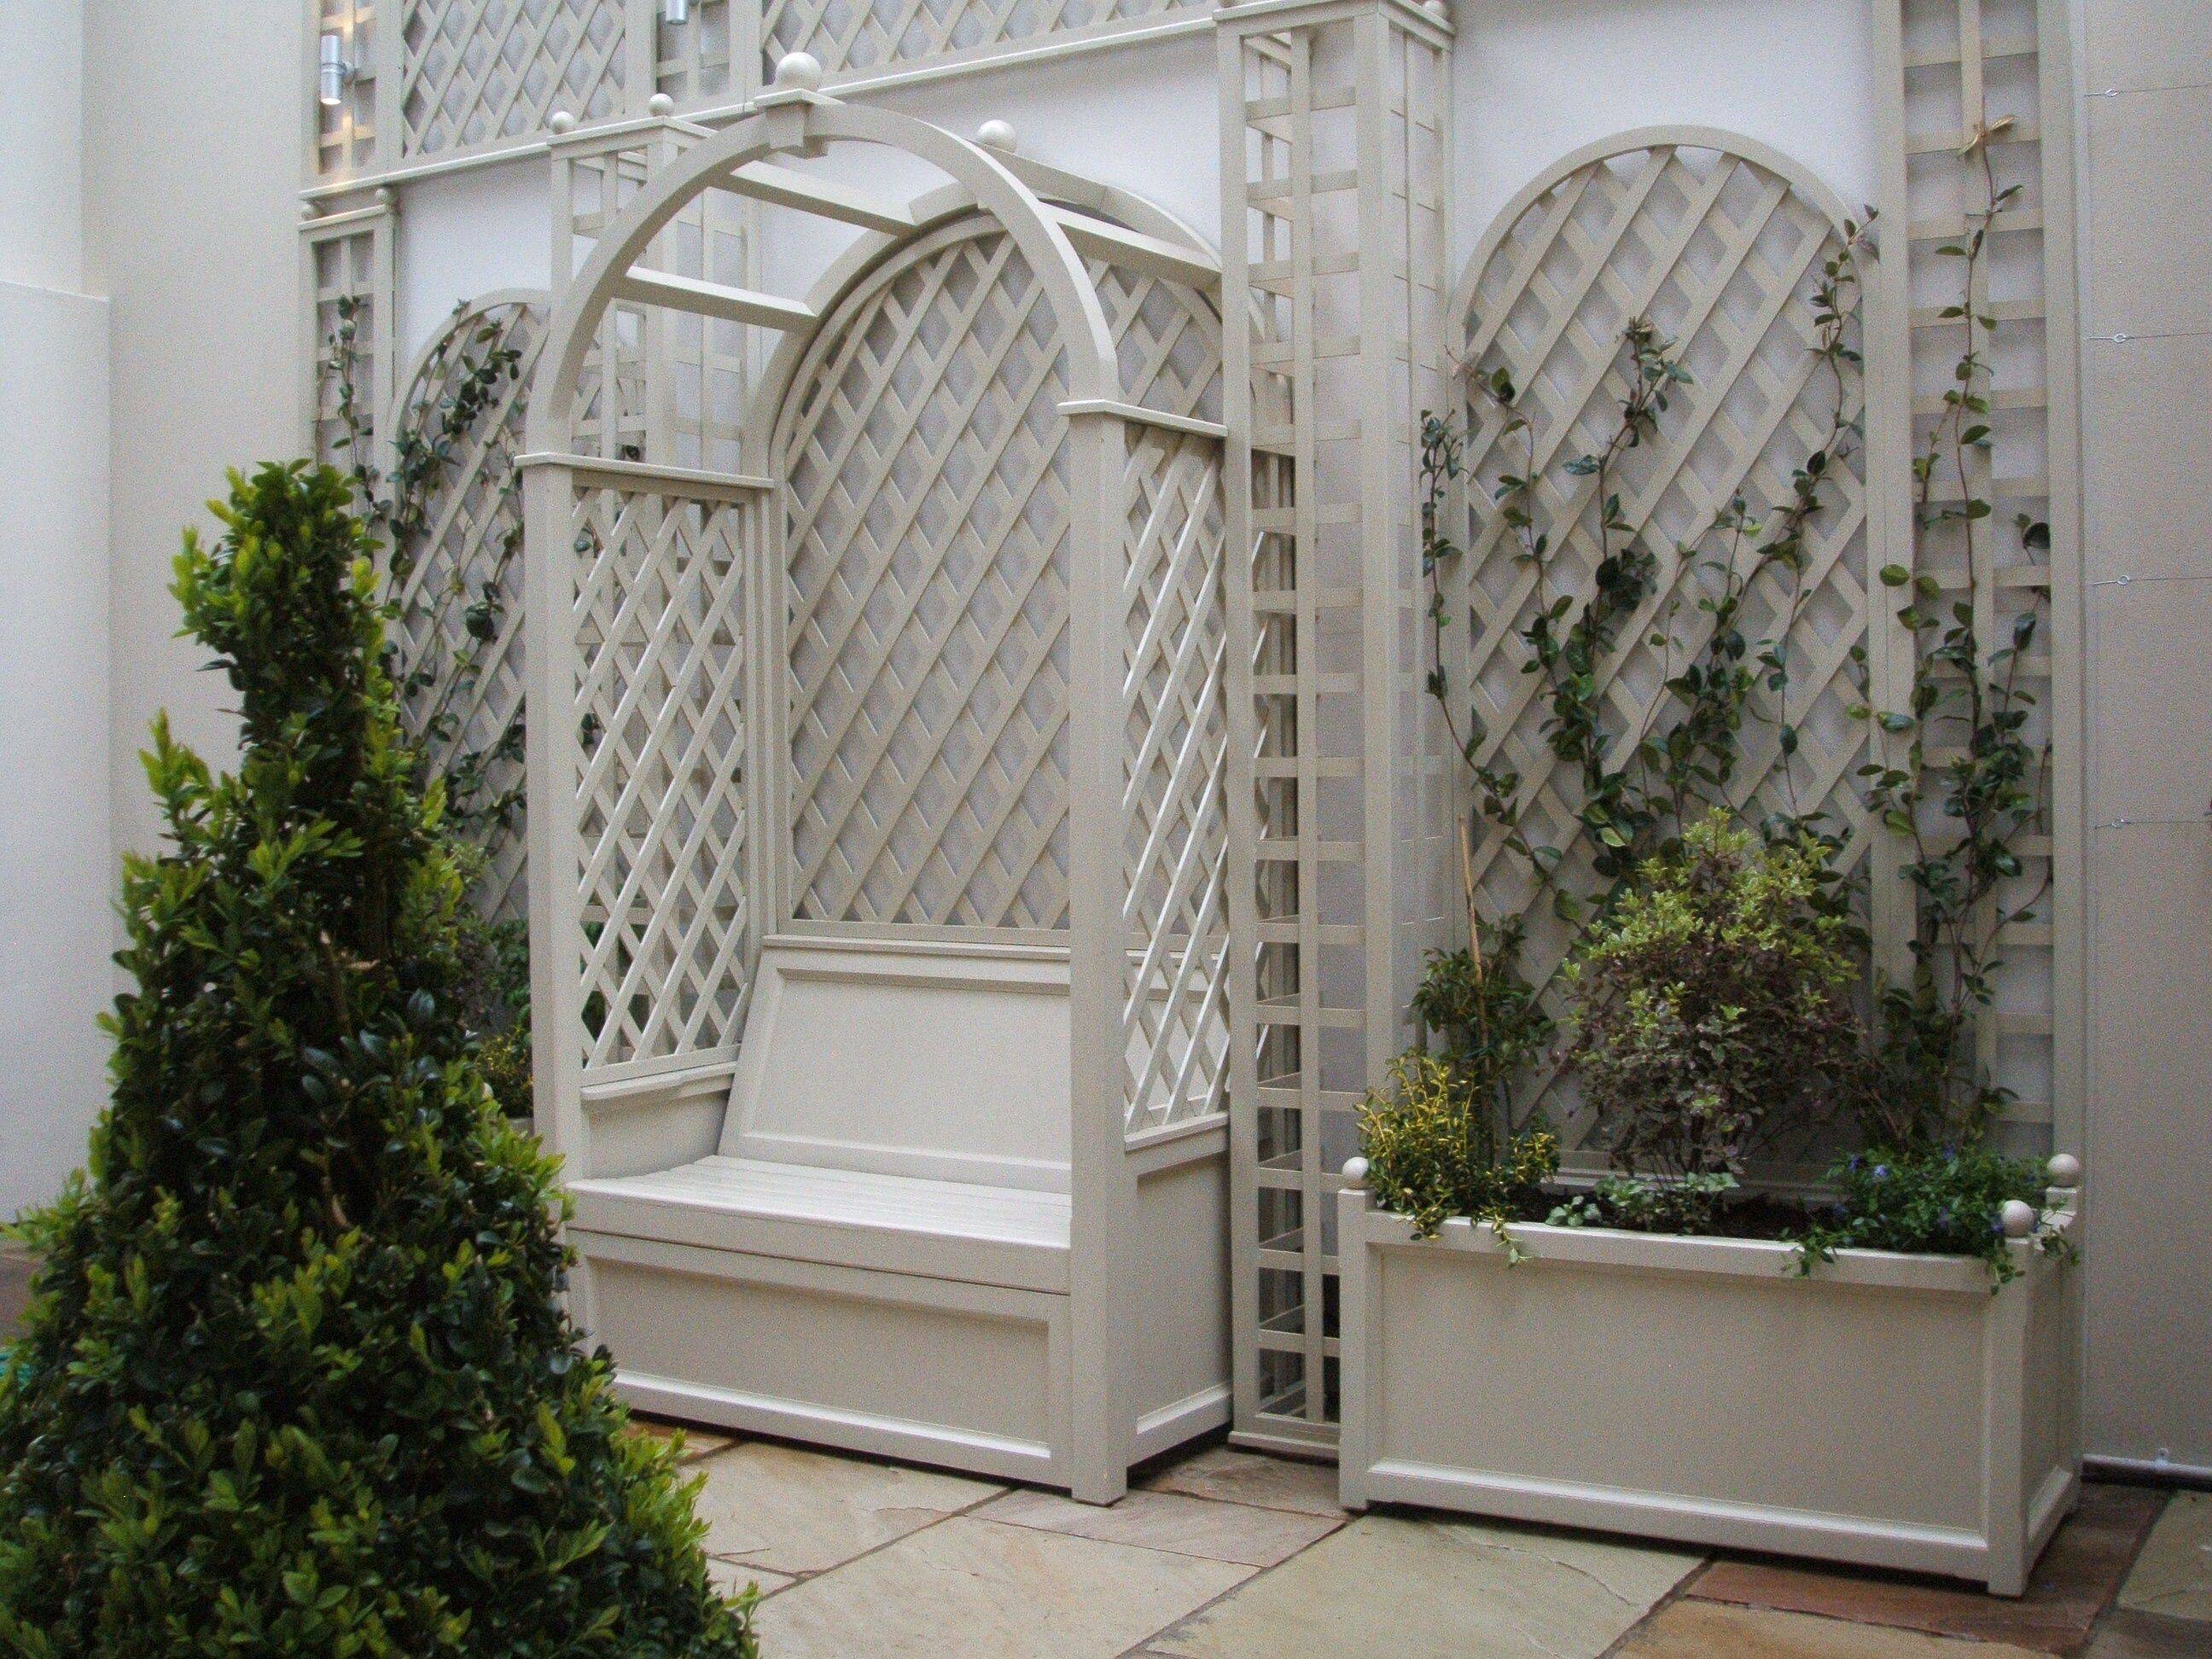 Formal Garden Garden Gate Design